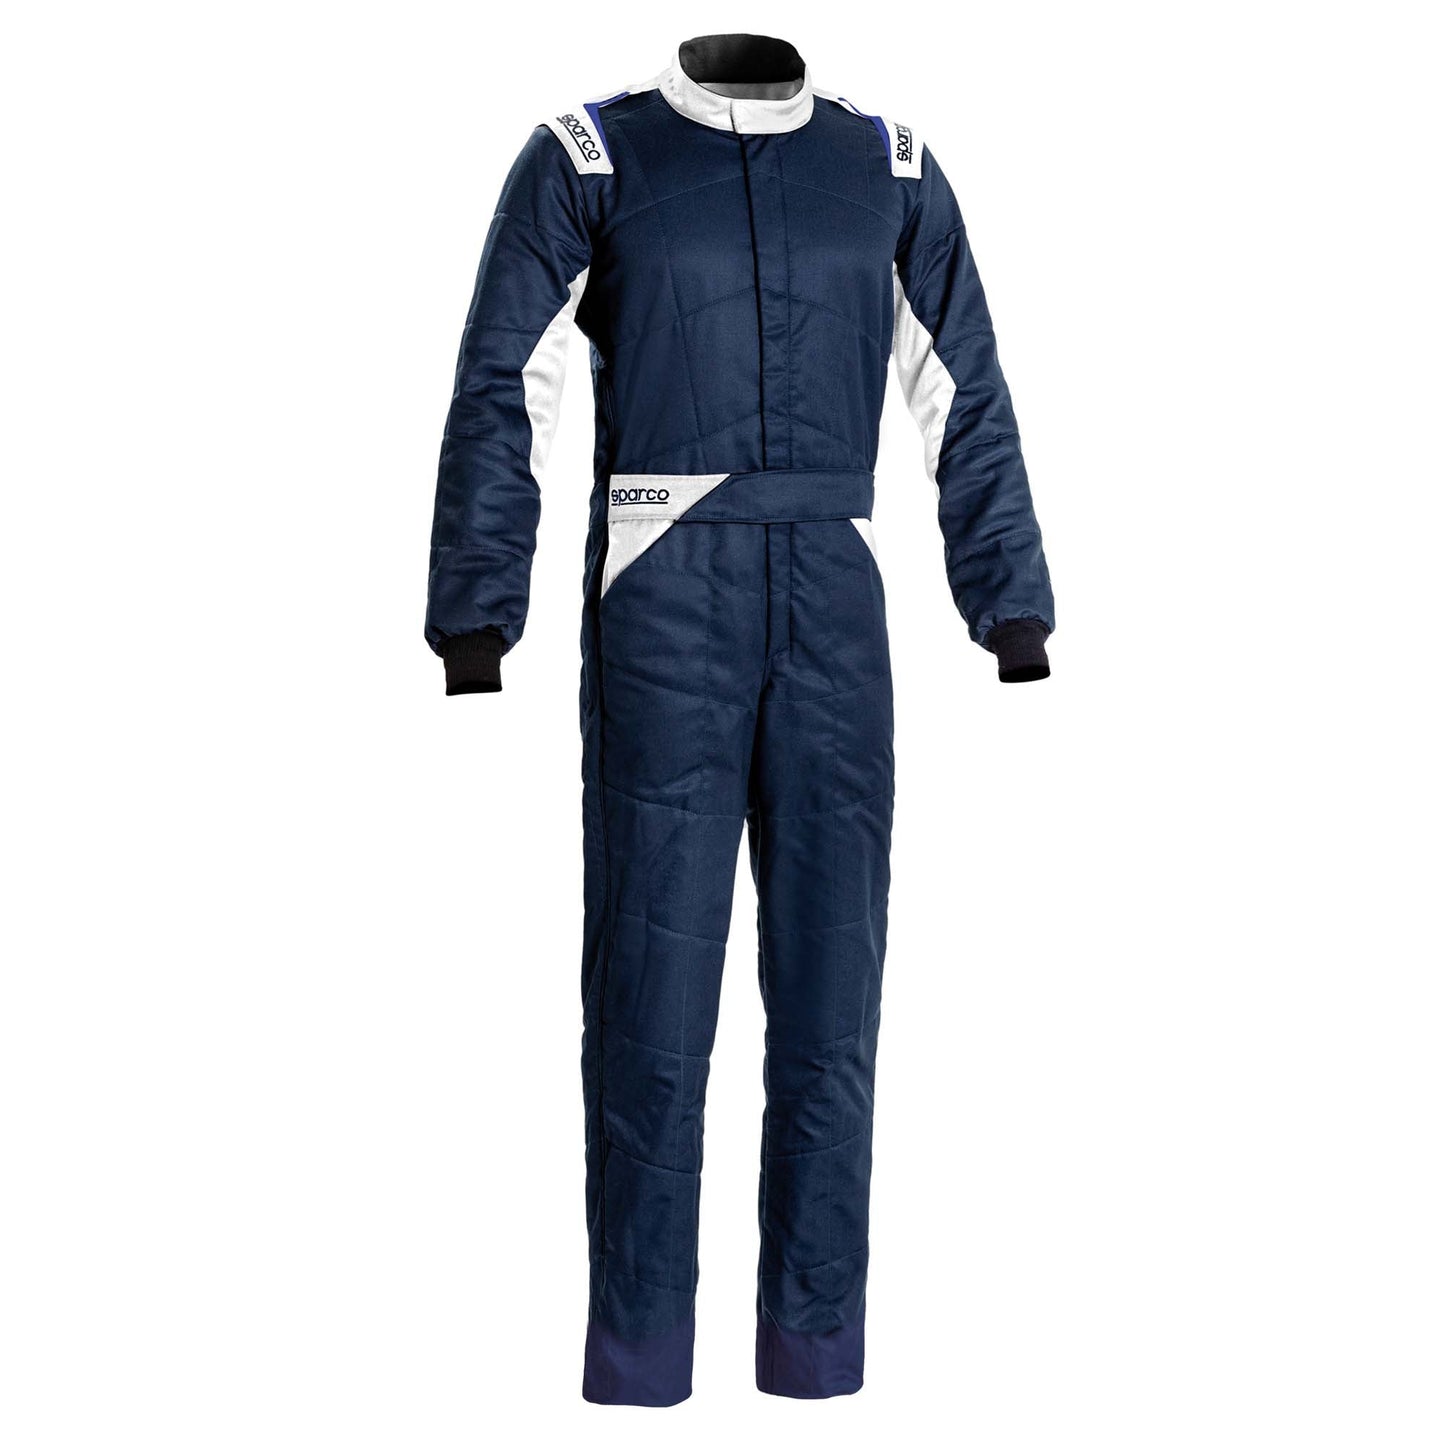 Sparco Sprint Racing Suit Boot Cut - 2021 Model